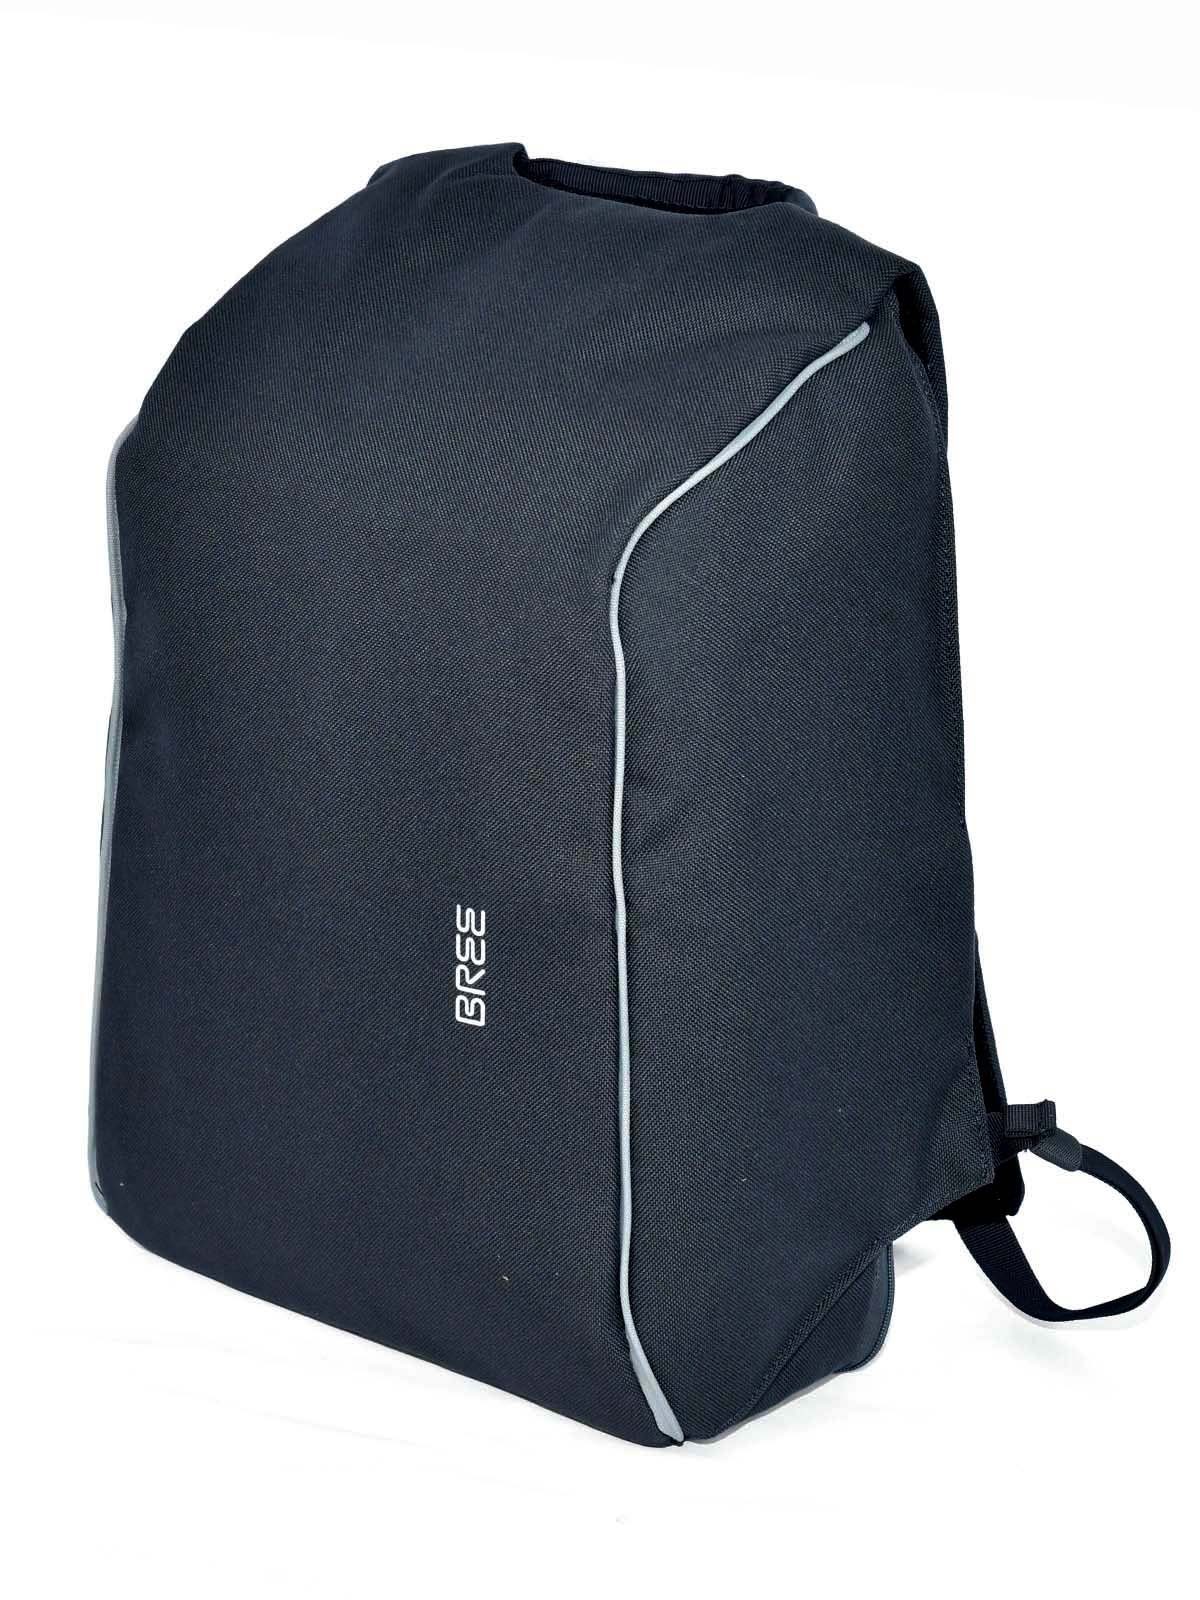 BREE Laptoprucksack BREE Unisex- Backpack Punch Hoody1, Rucksack, Dark Grey  32x38x27 cm